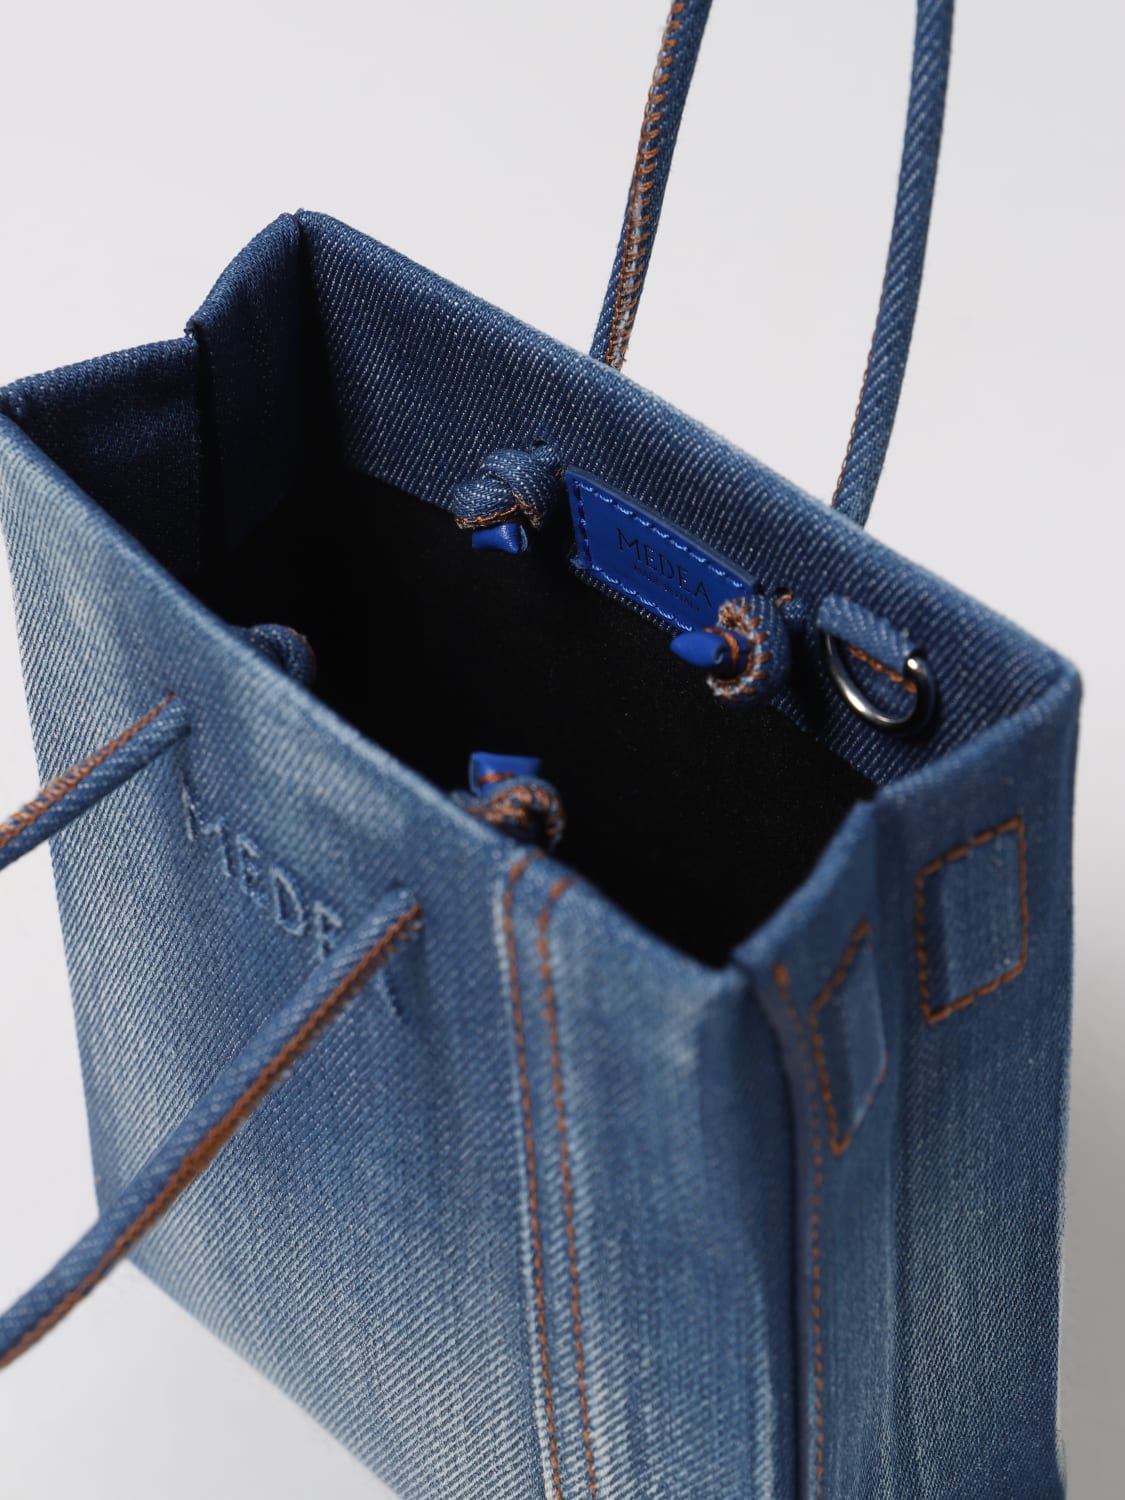 Medea Outlet: mini bag for woman - Gnawed Blue | Medea mini bag